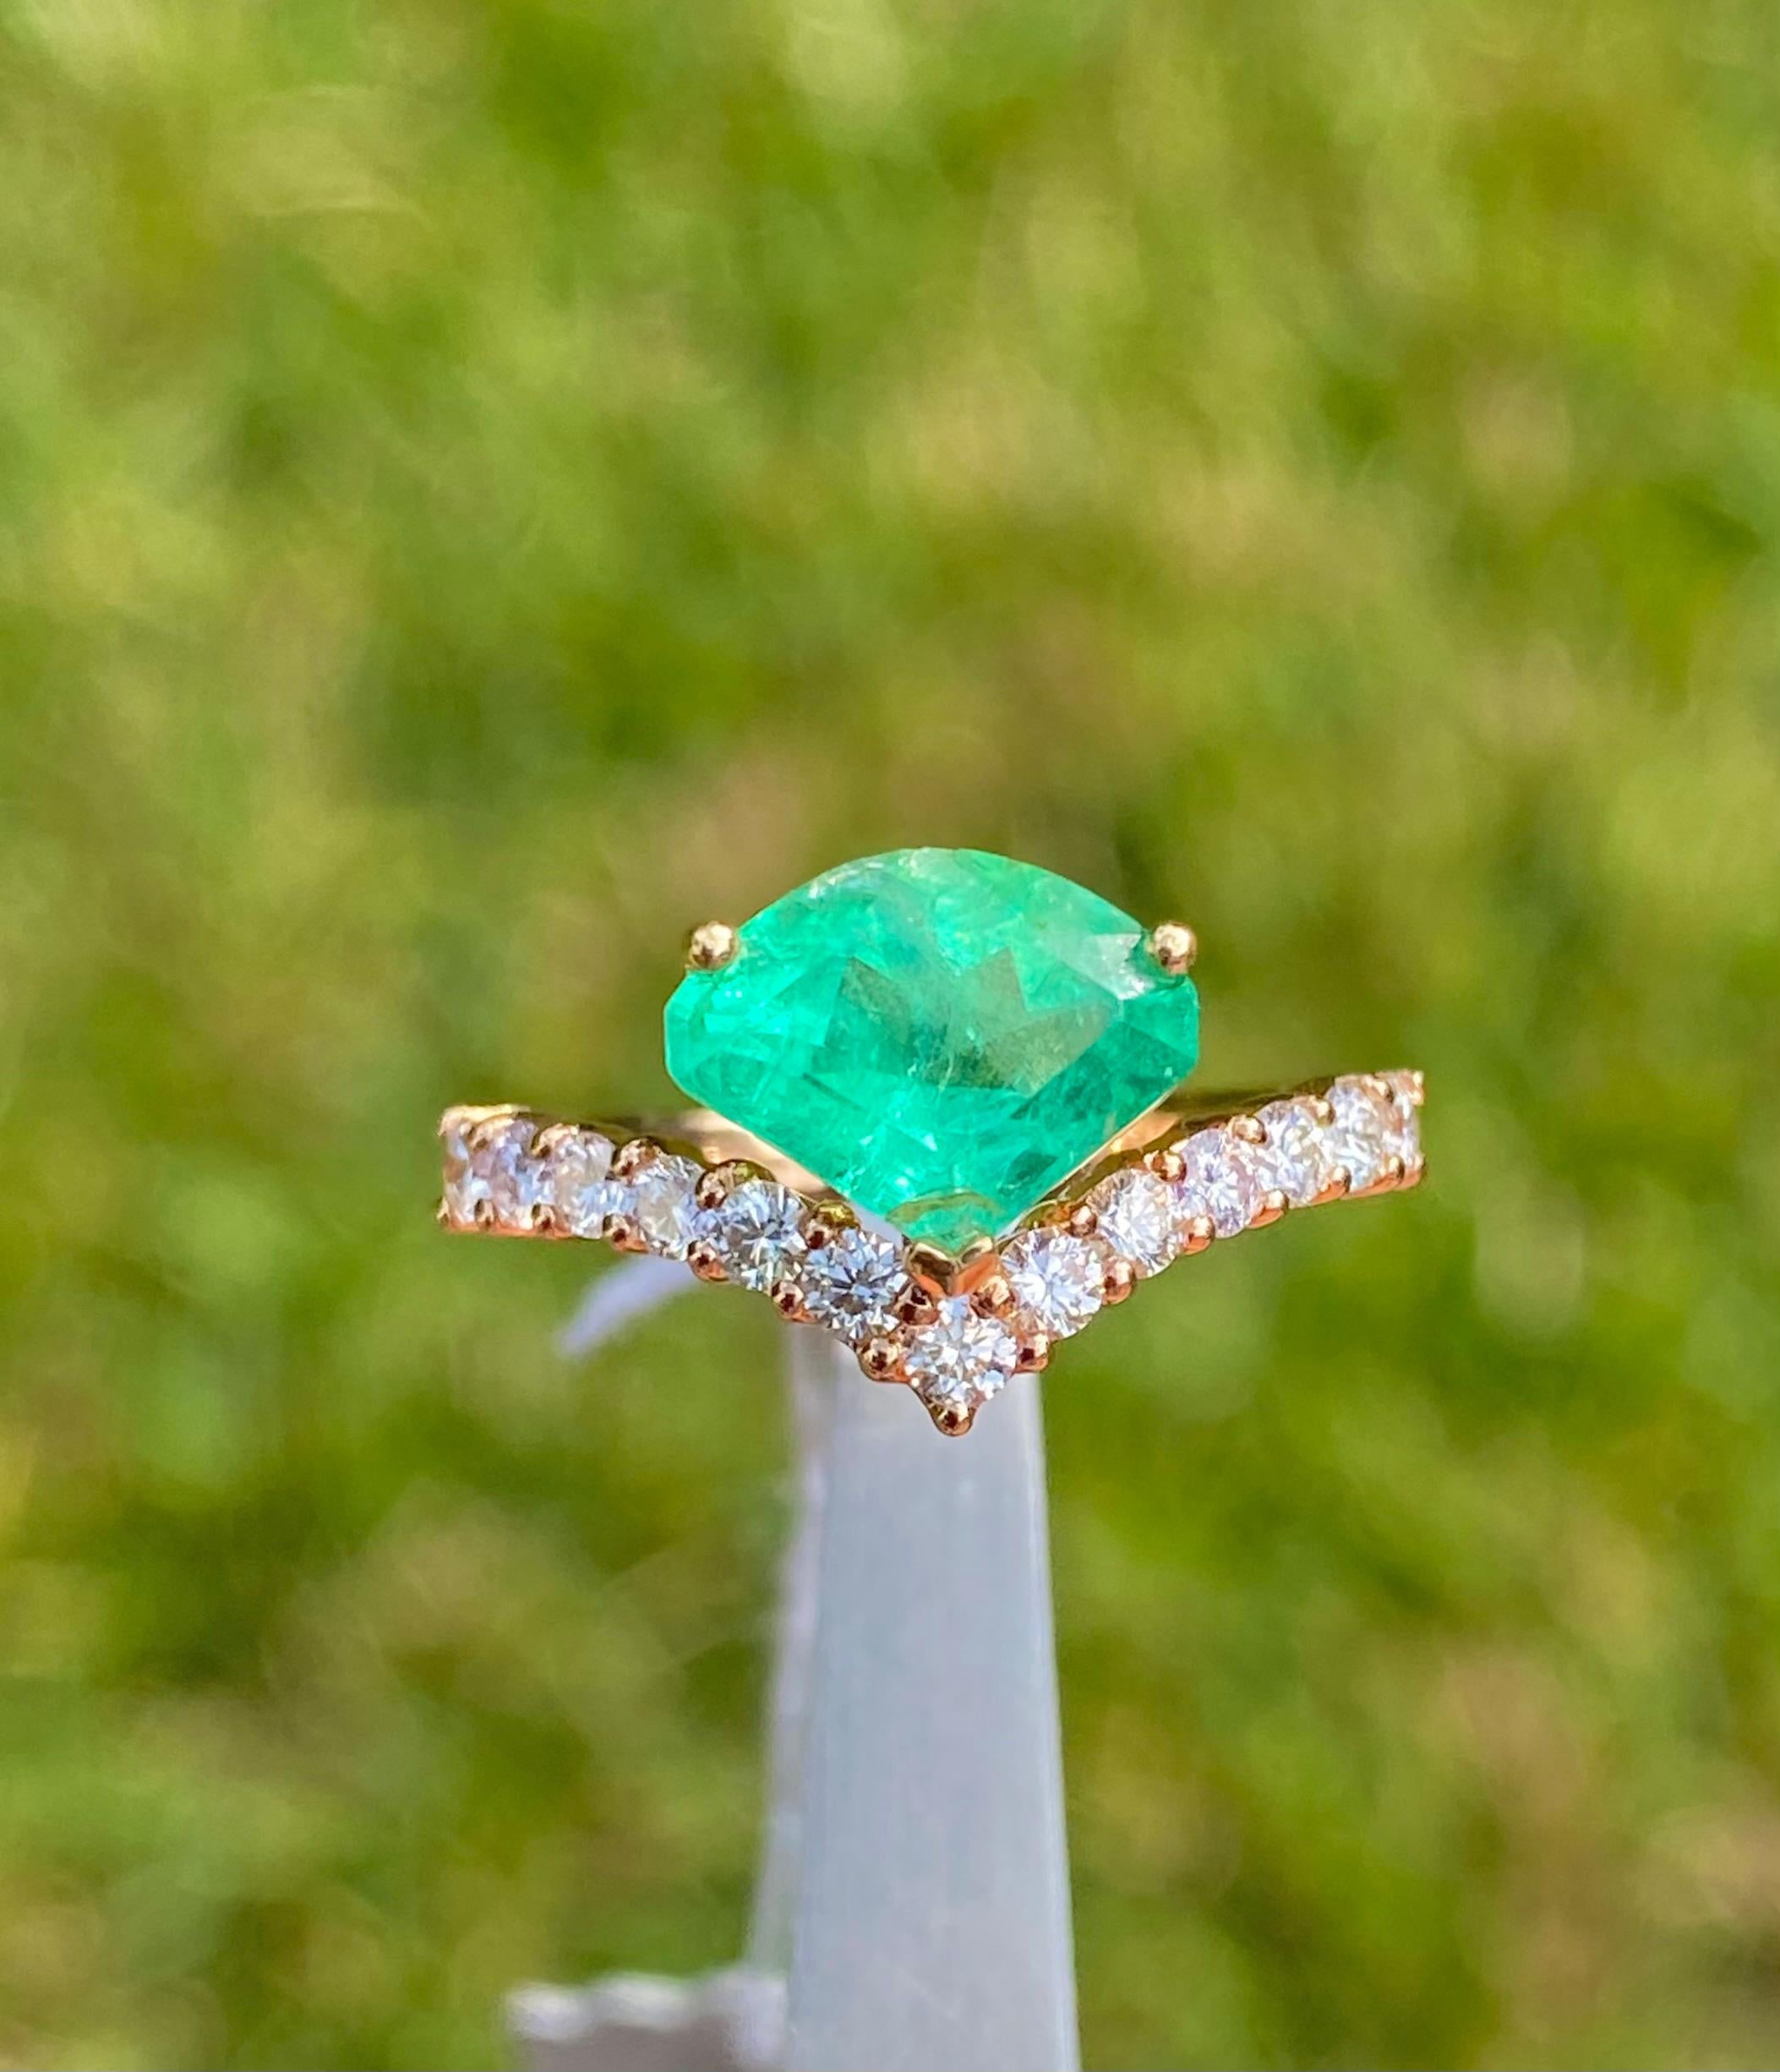 ✔ Natural Emerald and Diamonds
✔ Gold Karat: 18k
✔ Emerald Shape: Kite (Fancy Cut)
✔ Emerald Weight: 1.37 (white gold)
✔ Emerald Origin: Colombia
✔ Diamonds: 13 Diamonds, 0.38 carats total
✔ Ring Weight: 2.59 grams
✔ Ring Size: 6 1/2 U.S.